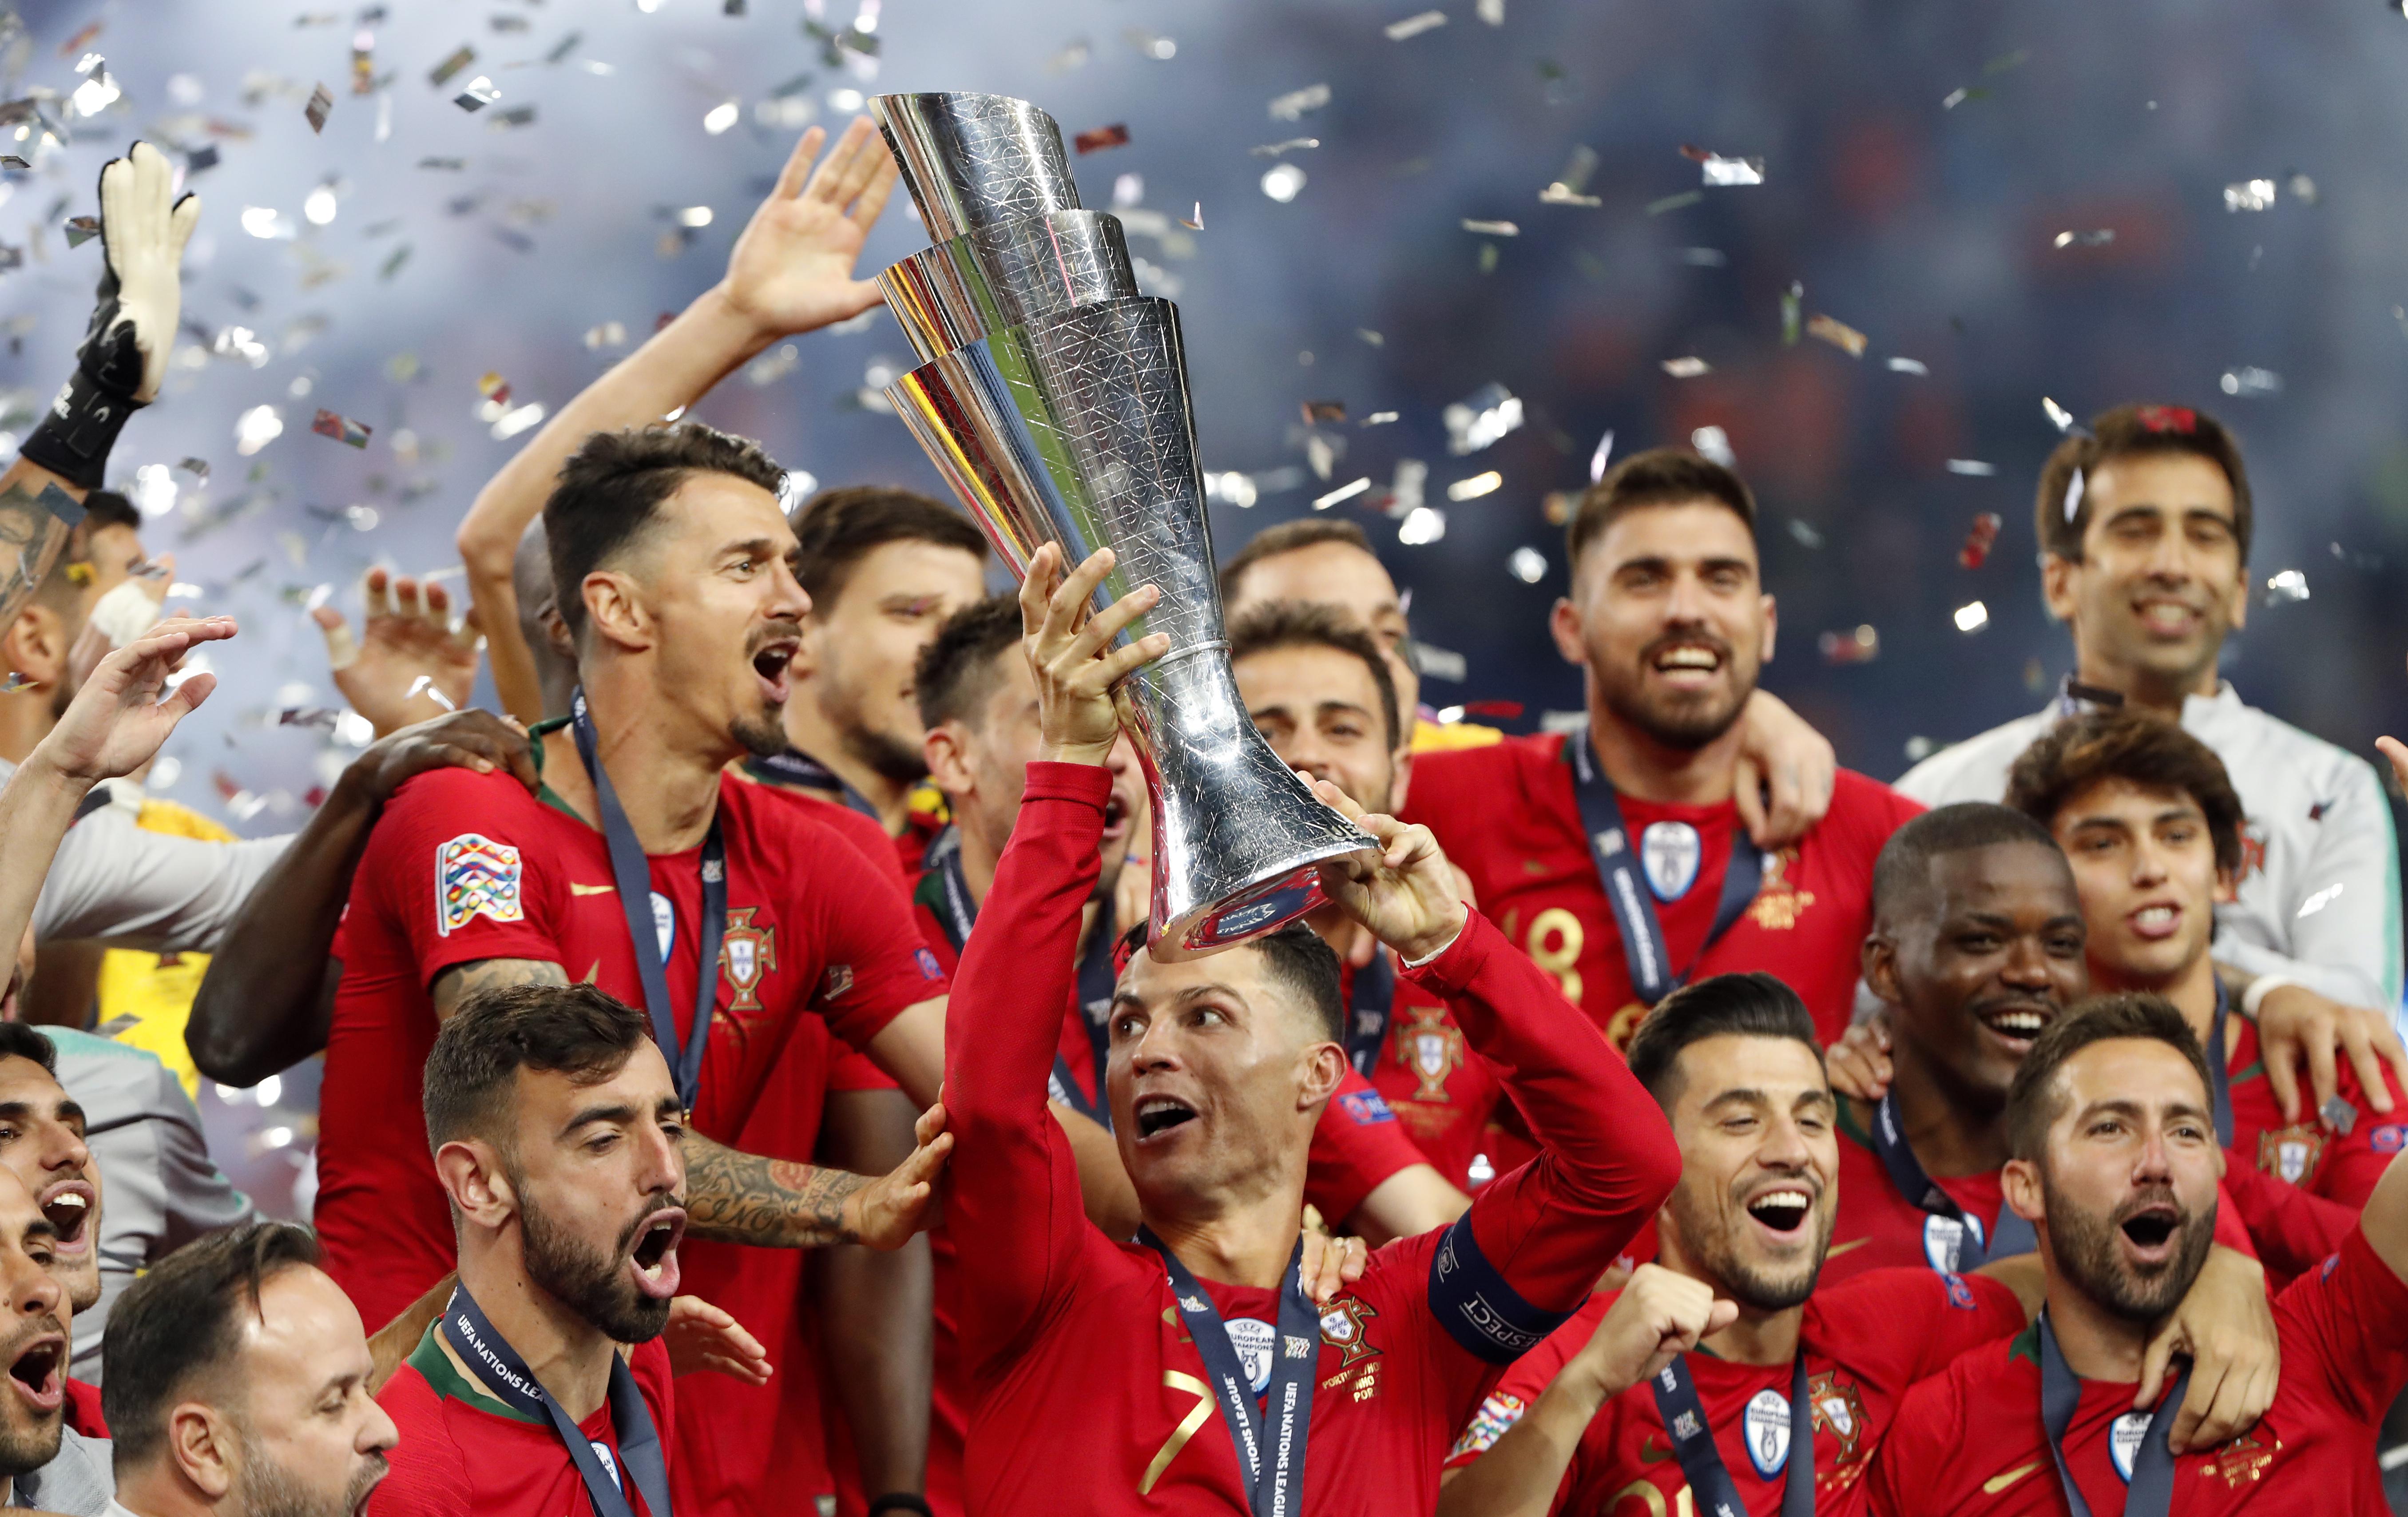 UEFA Nations League winner Portugal rises in FIFA rankings | The